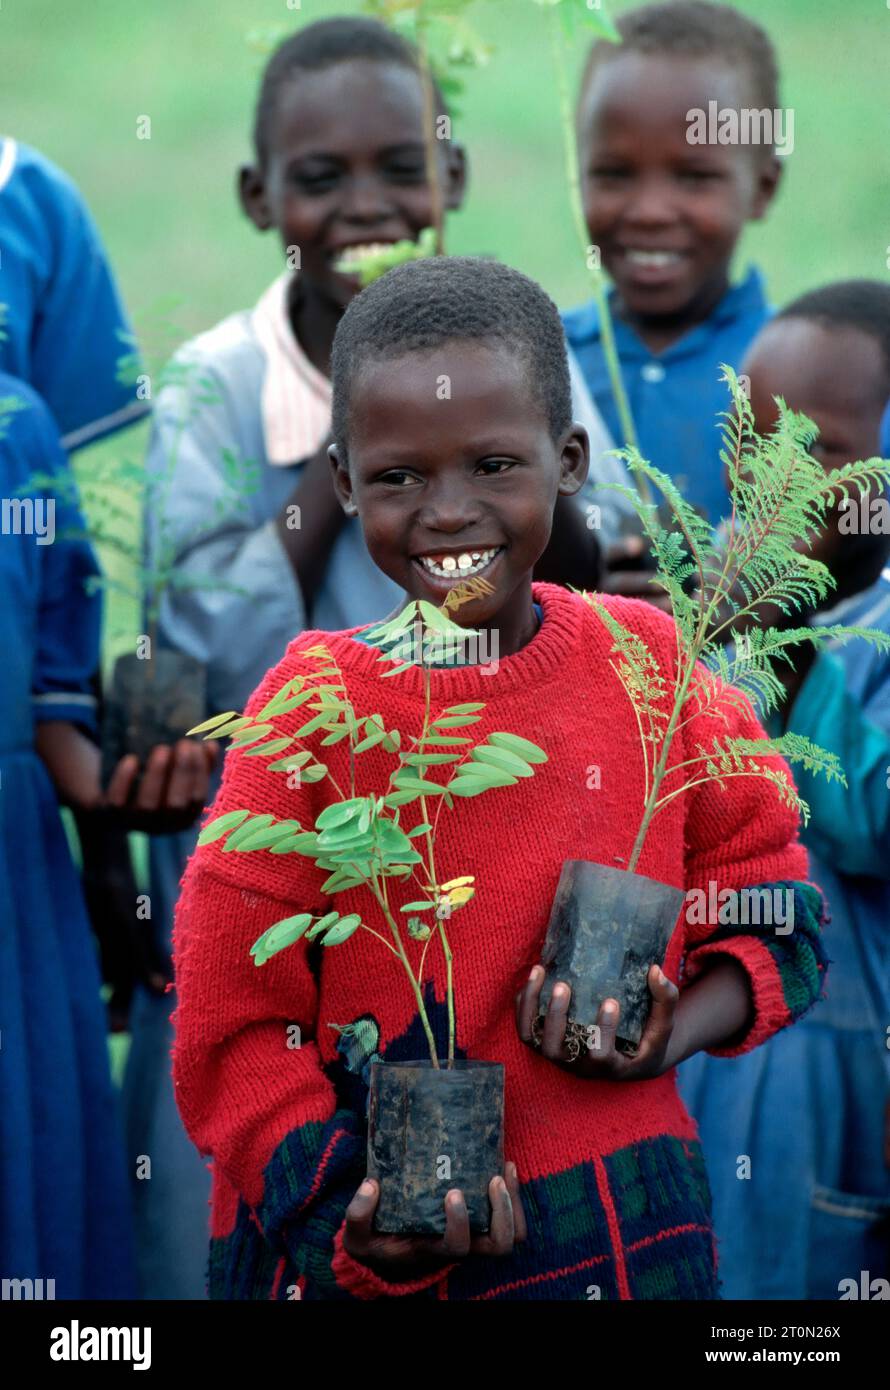 Tansania, TZA: Schueler pflanzen junge Baume in einem Aufforstungsprojekt | Tanzania: pupils planting trees in a reforestation project Stock Photo